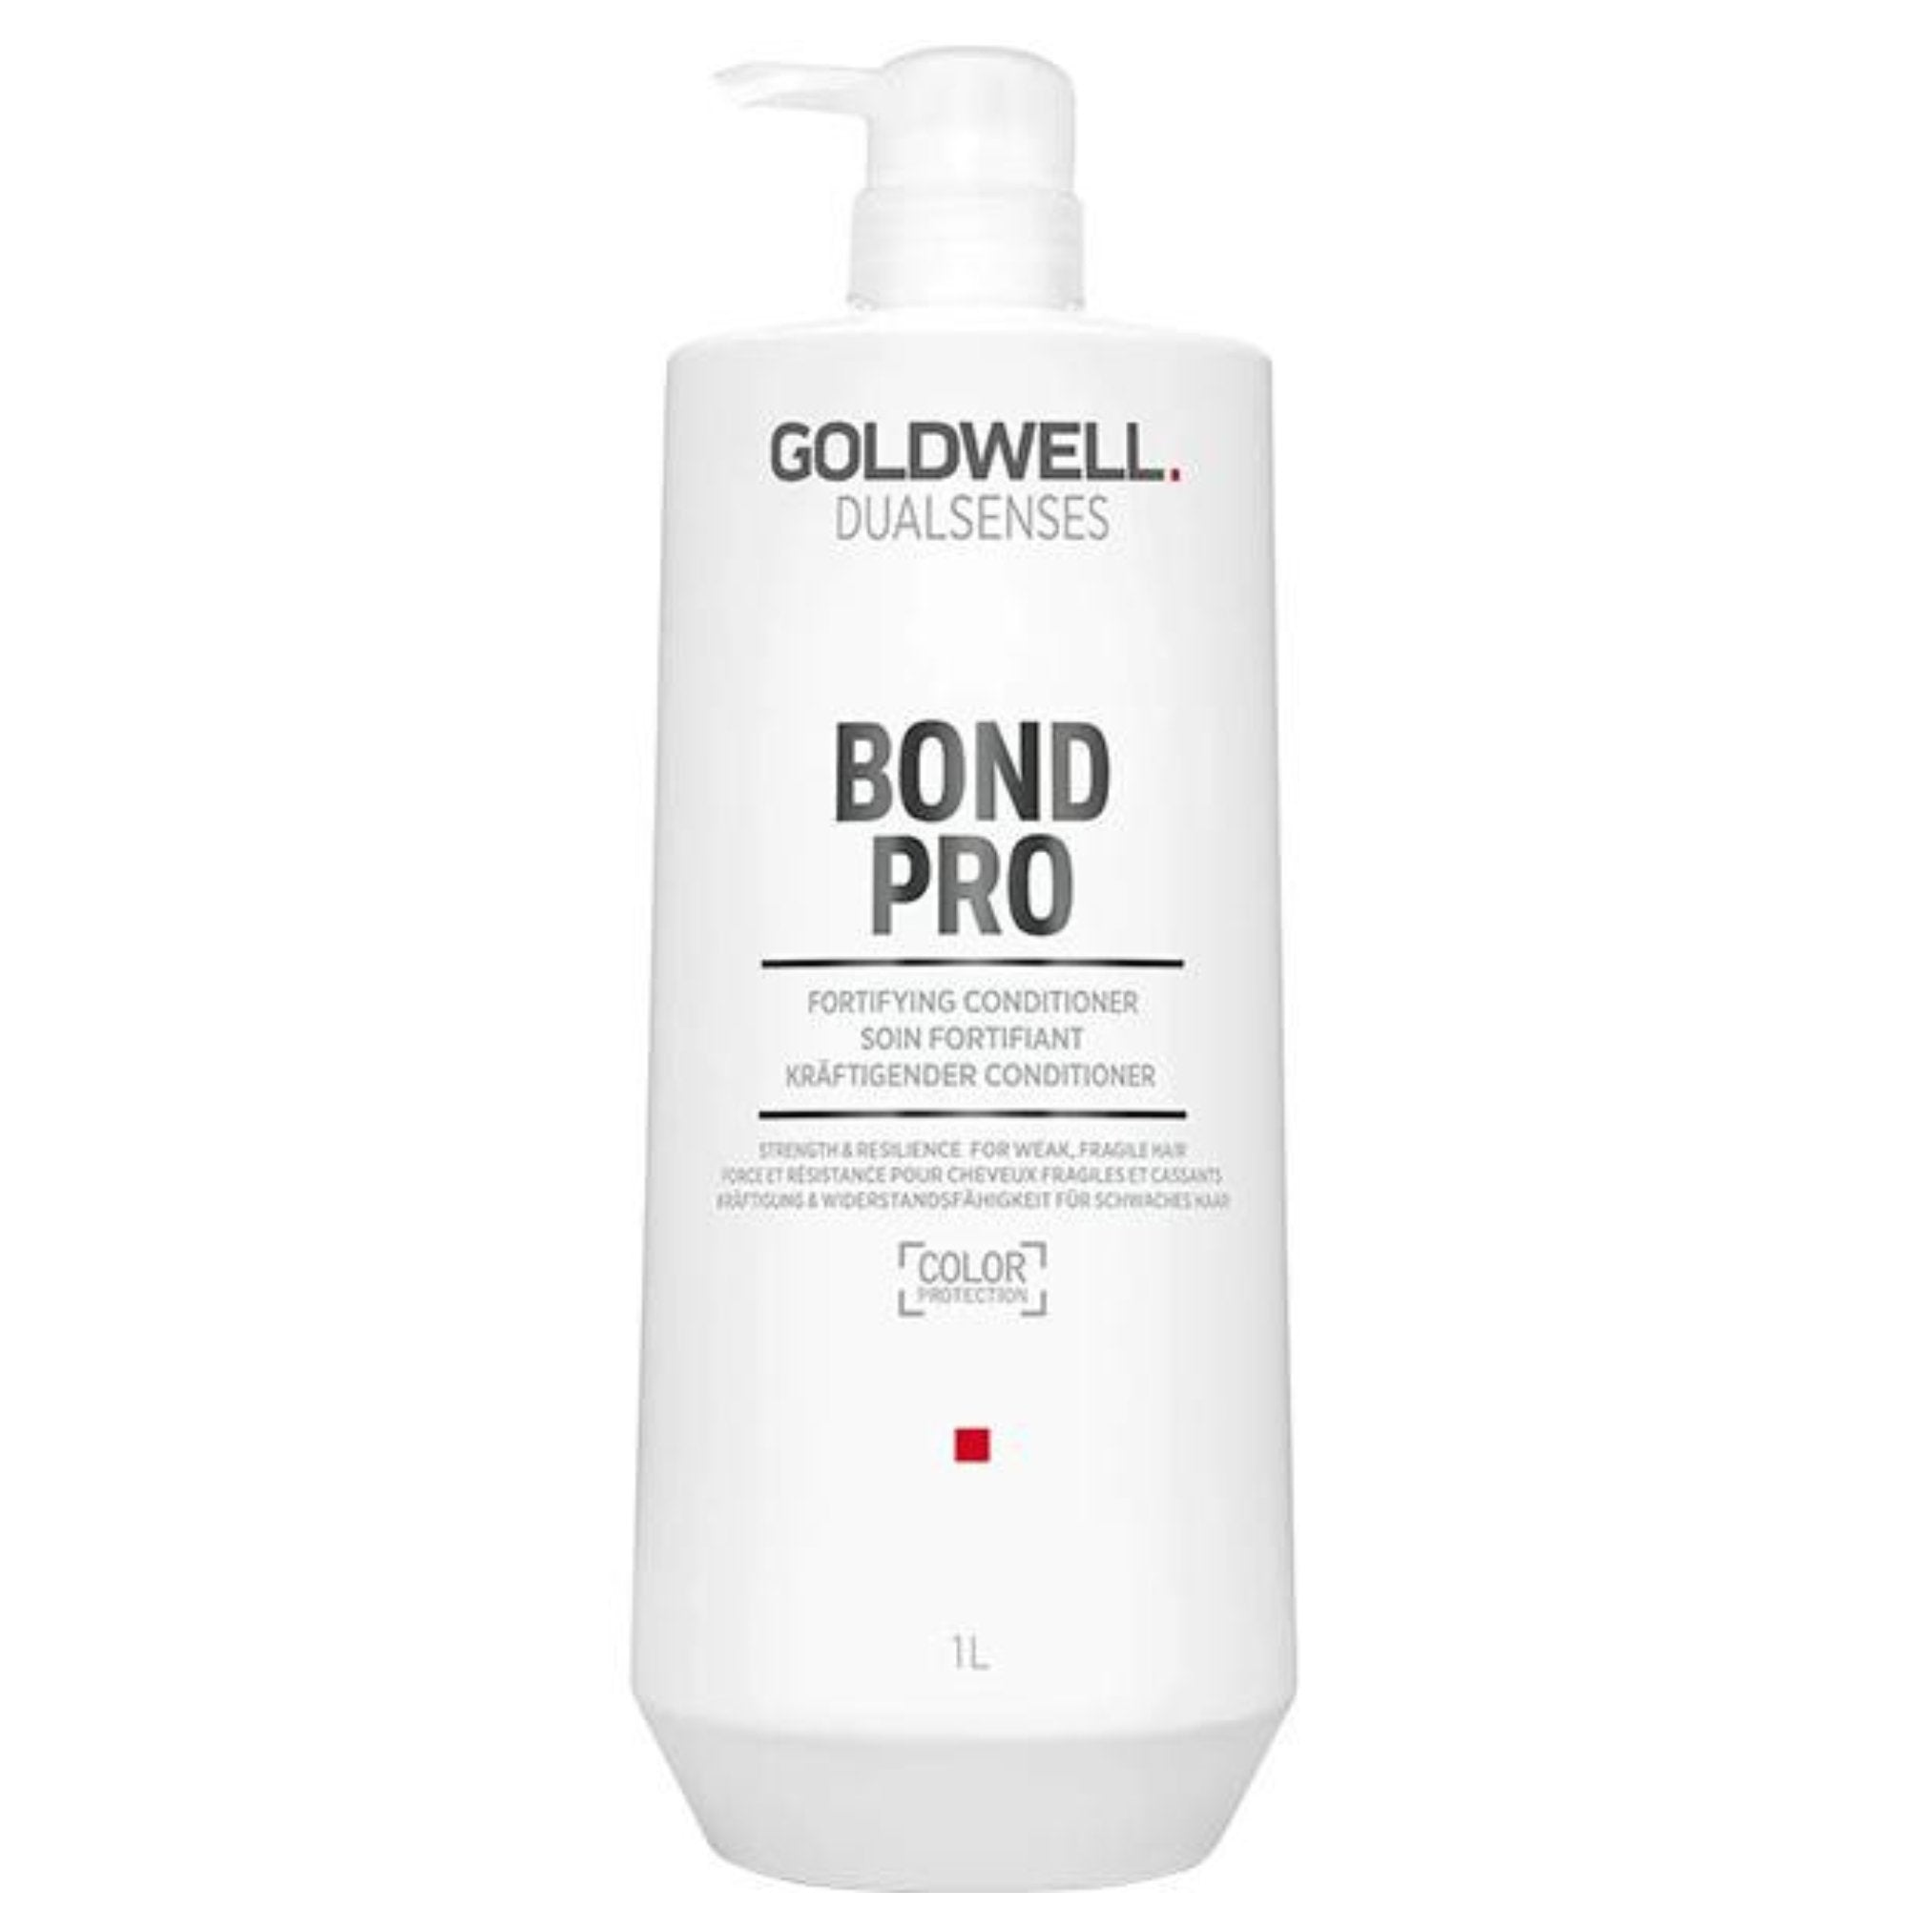 Goldwell. Dual Senses Bond Pro Revitalisant Fortifiant - 1000 ml - Concept C. Shop